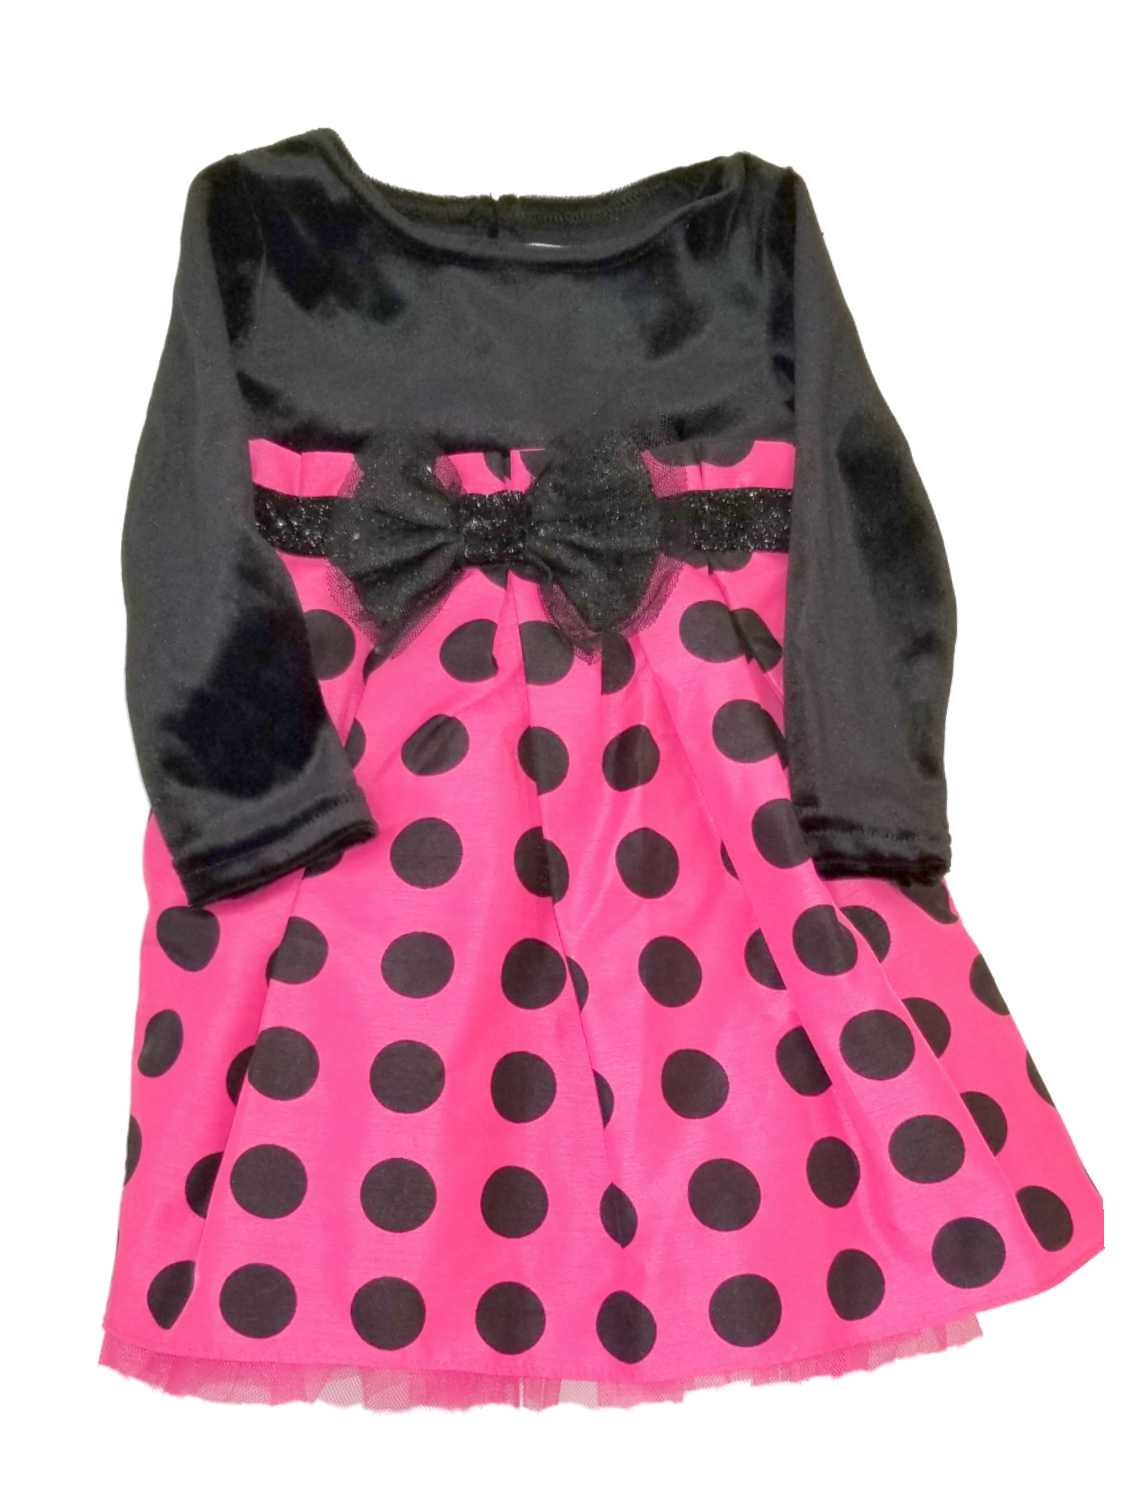 Youngland Infant Toddler Girls Pink Polka Dot Black Christmas Holiday Party Dress 24M